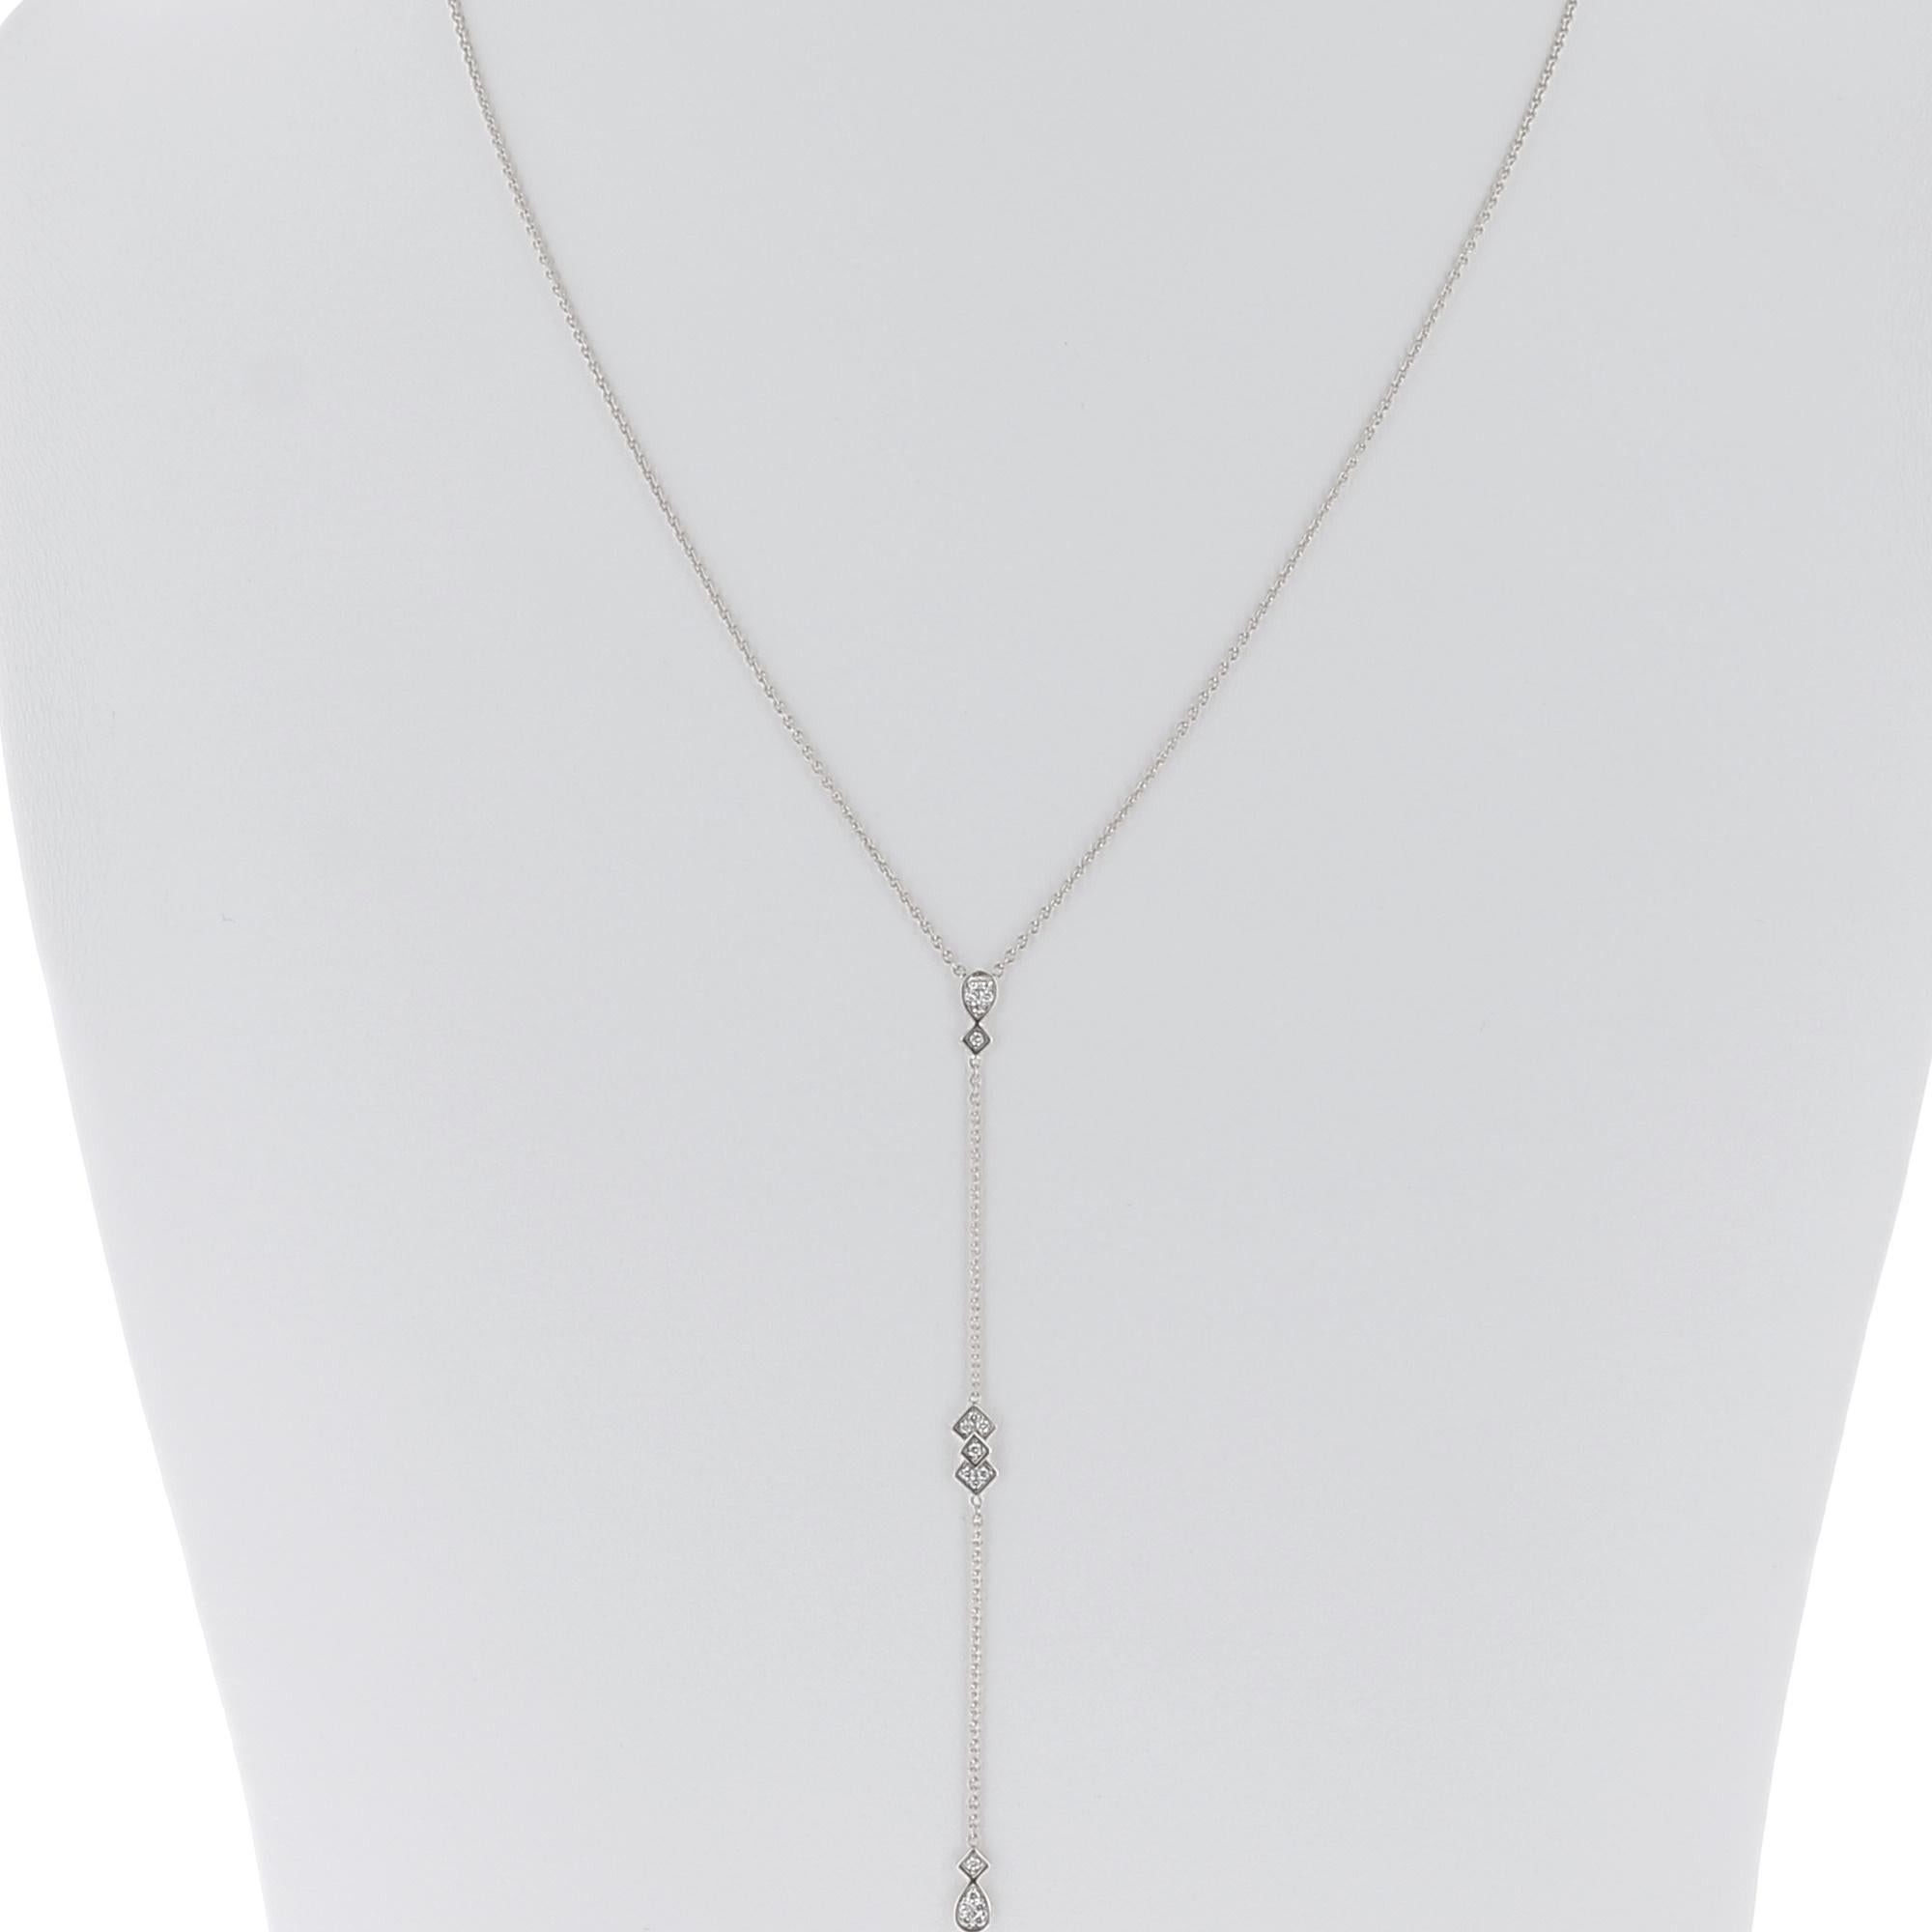 Contemporary GVS 0.10 Carat Round Diamond Necklace 18 Karat White Gold GVS Drop Necklace